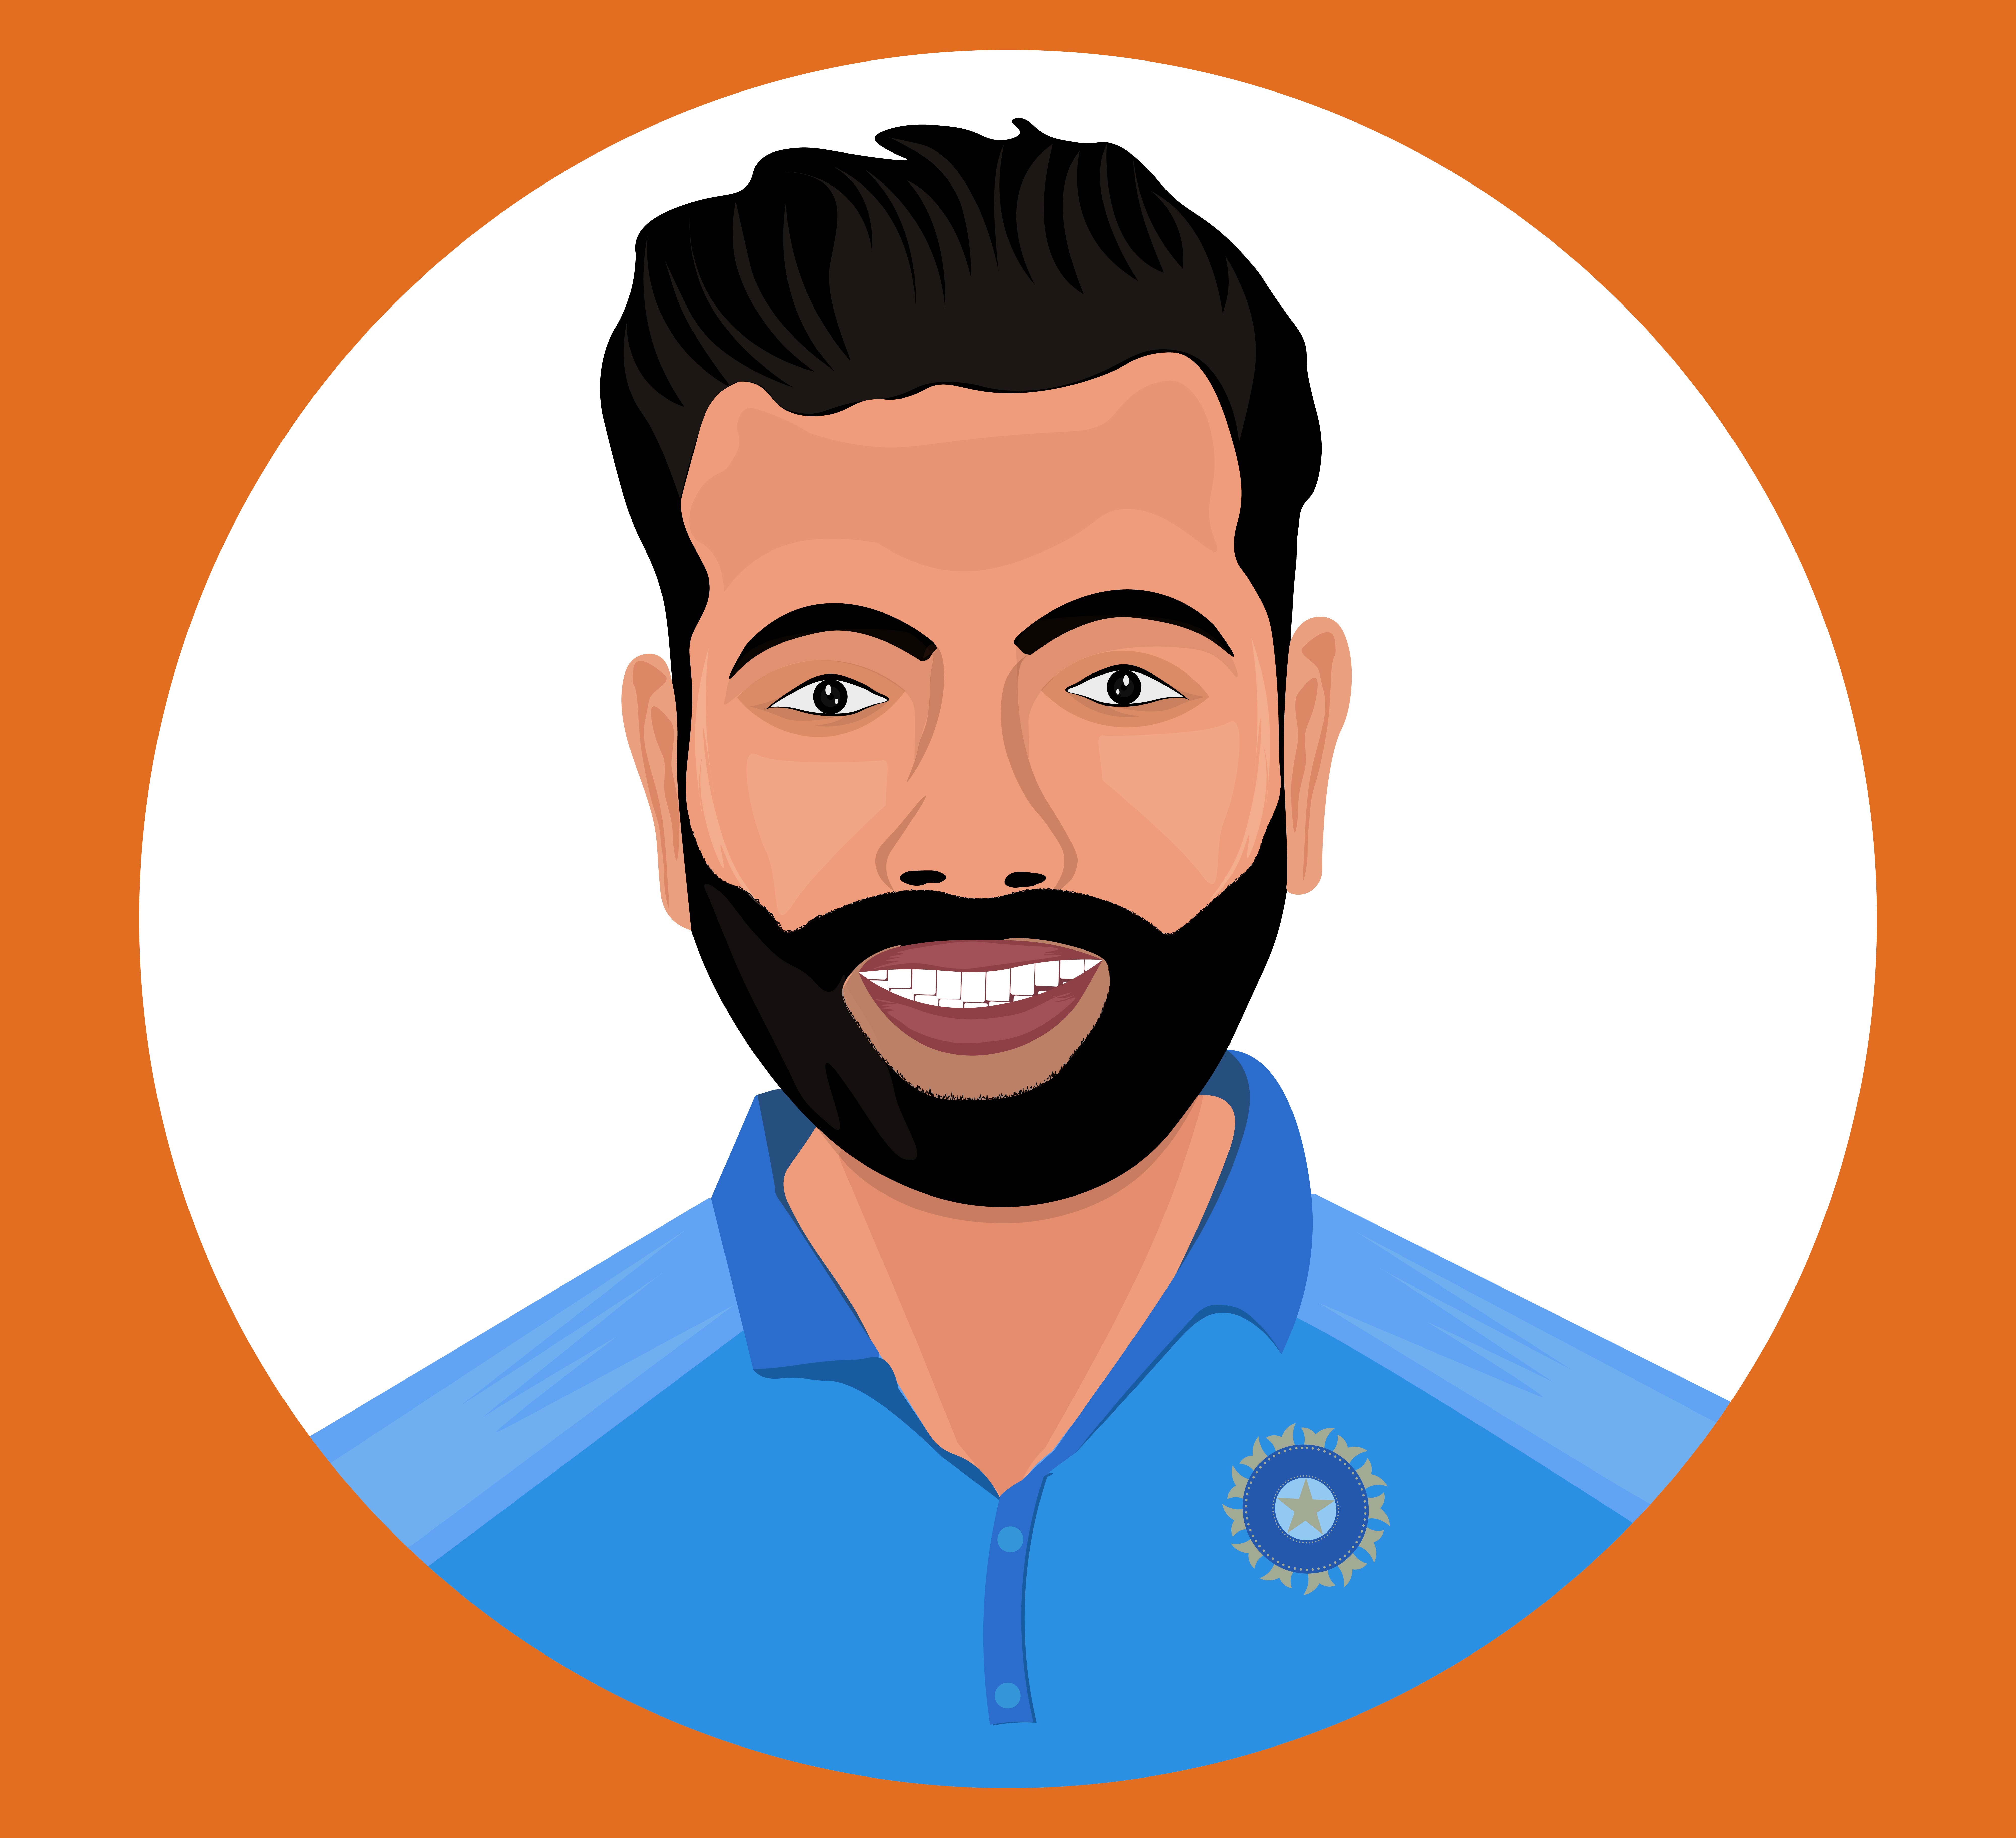 Indian Cricket player Rohit Sharma Caricature, cartoon illustration wearing blue jersey.